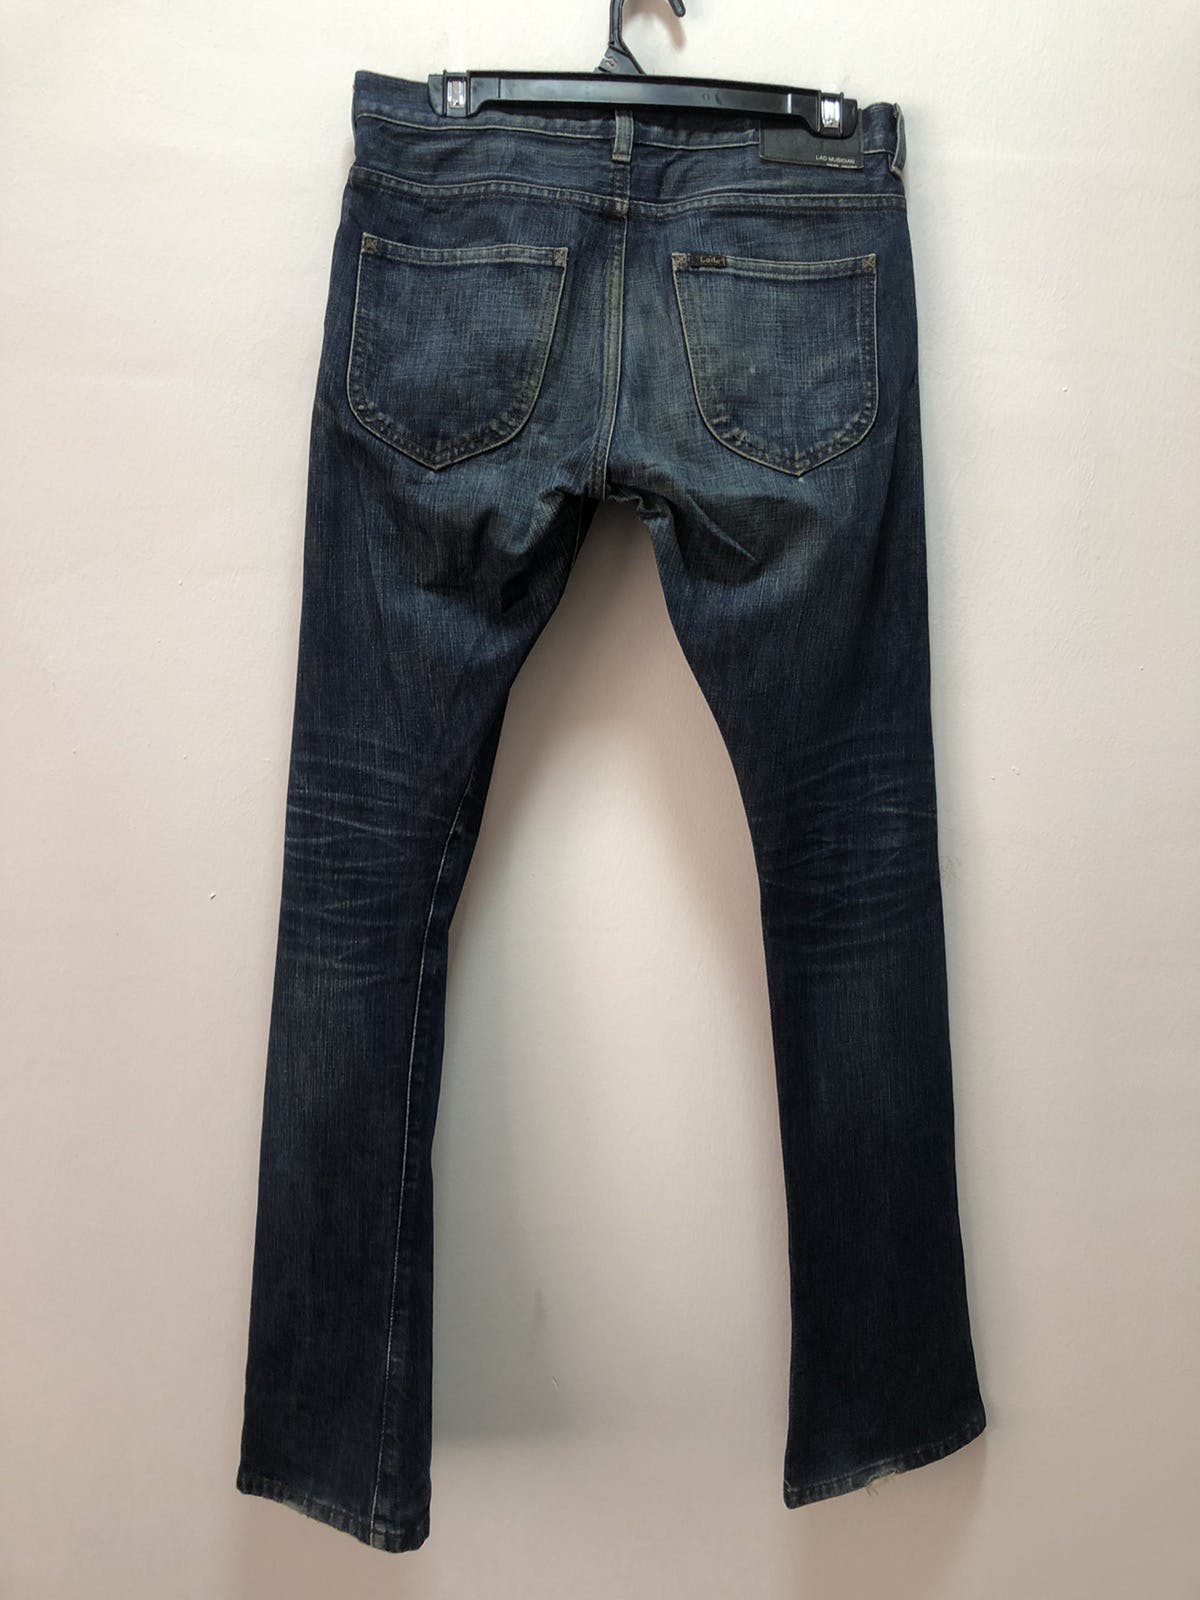 LAD MUSICIAN Denim Pants Jeans Wear 42 Japan Made - 4